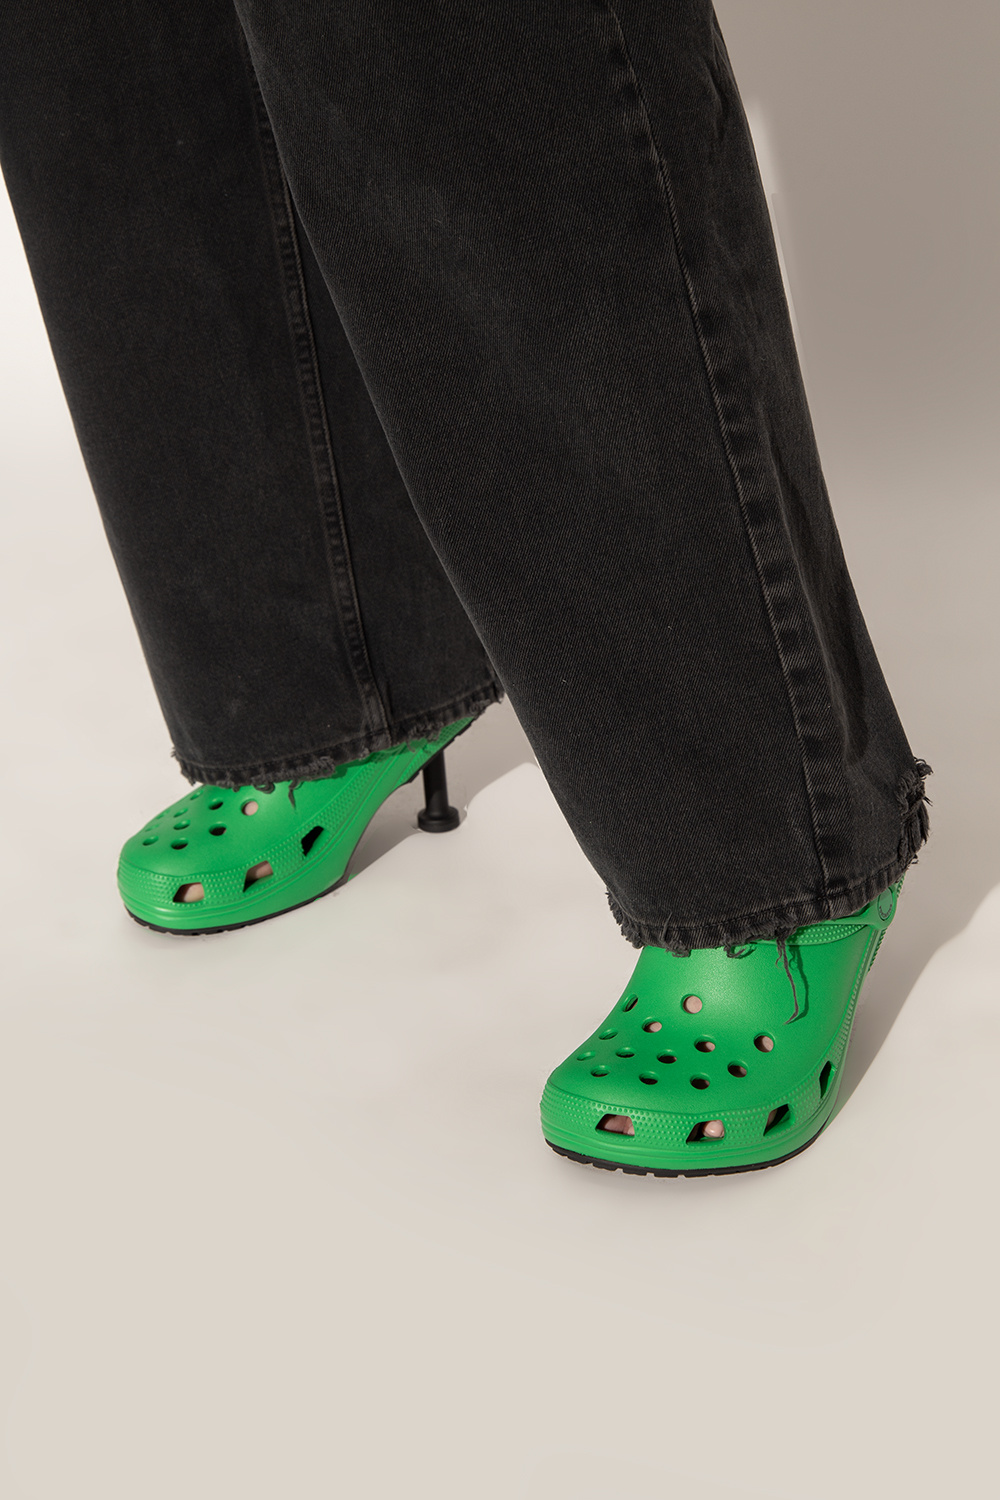 Glass croc spikes : r/crocs